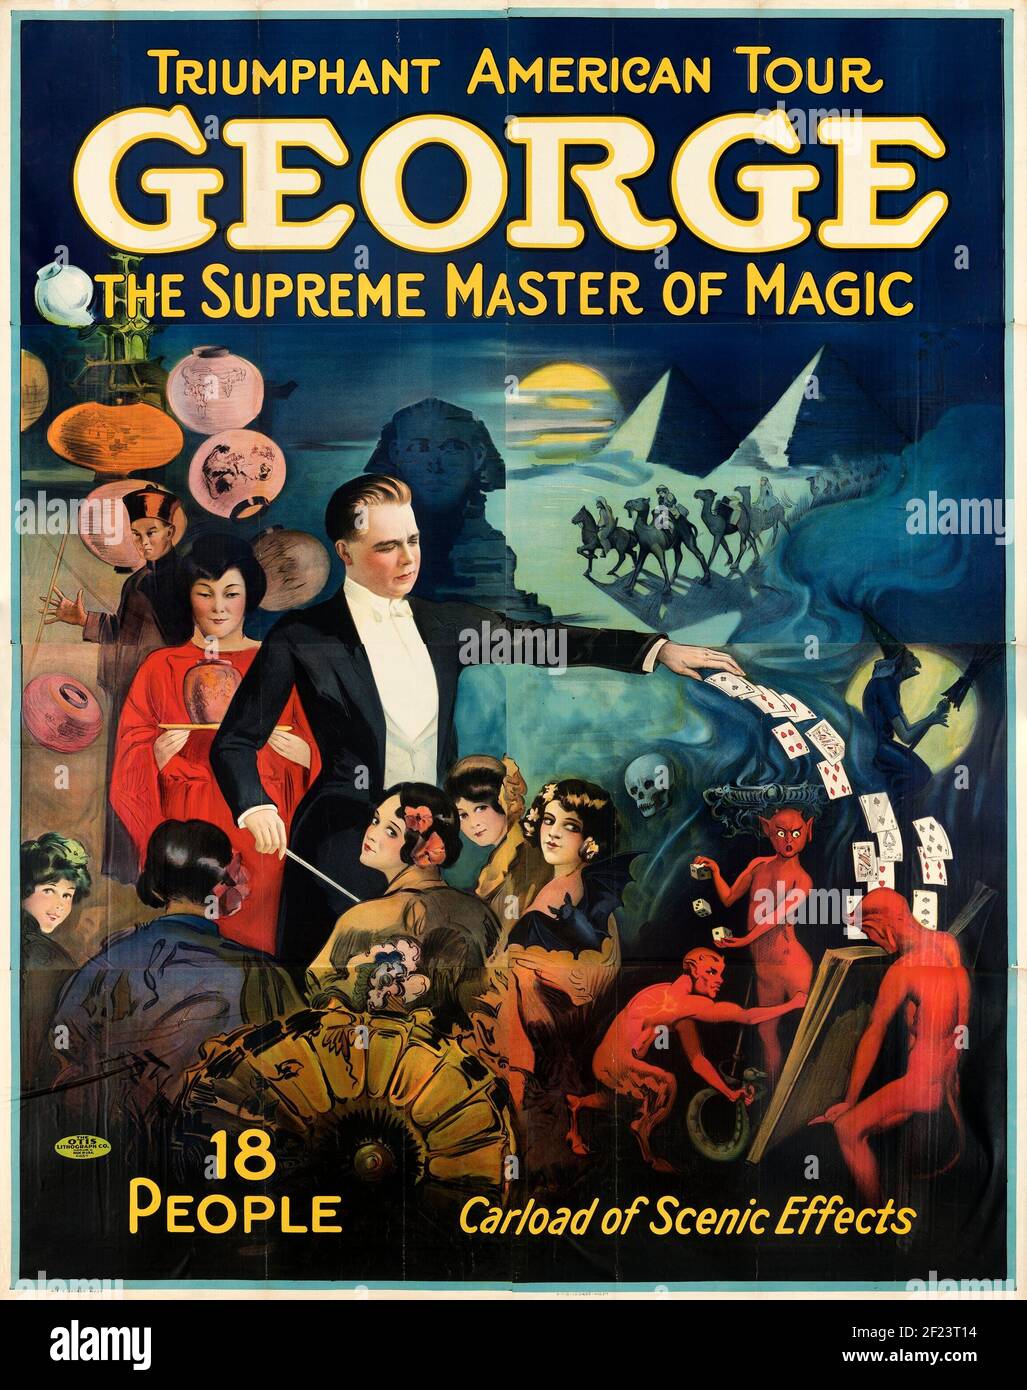 Triumphant American Tour, George The Supreme Master of Magic, 1920s Stock Photo